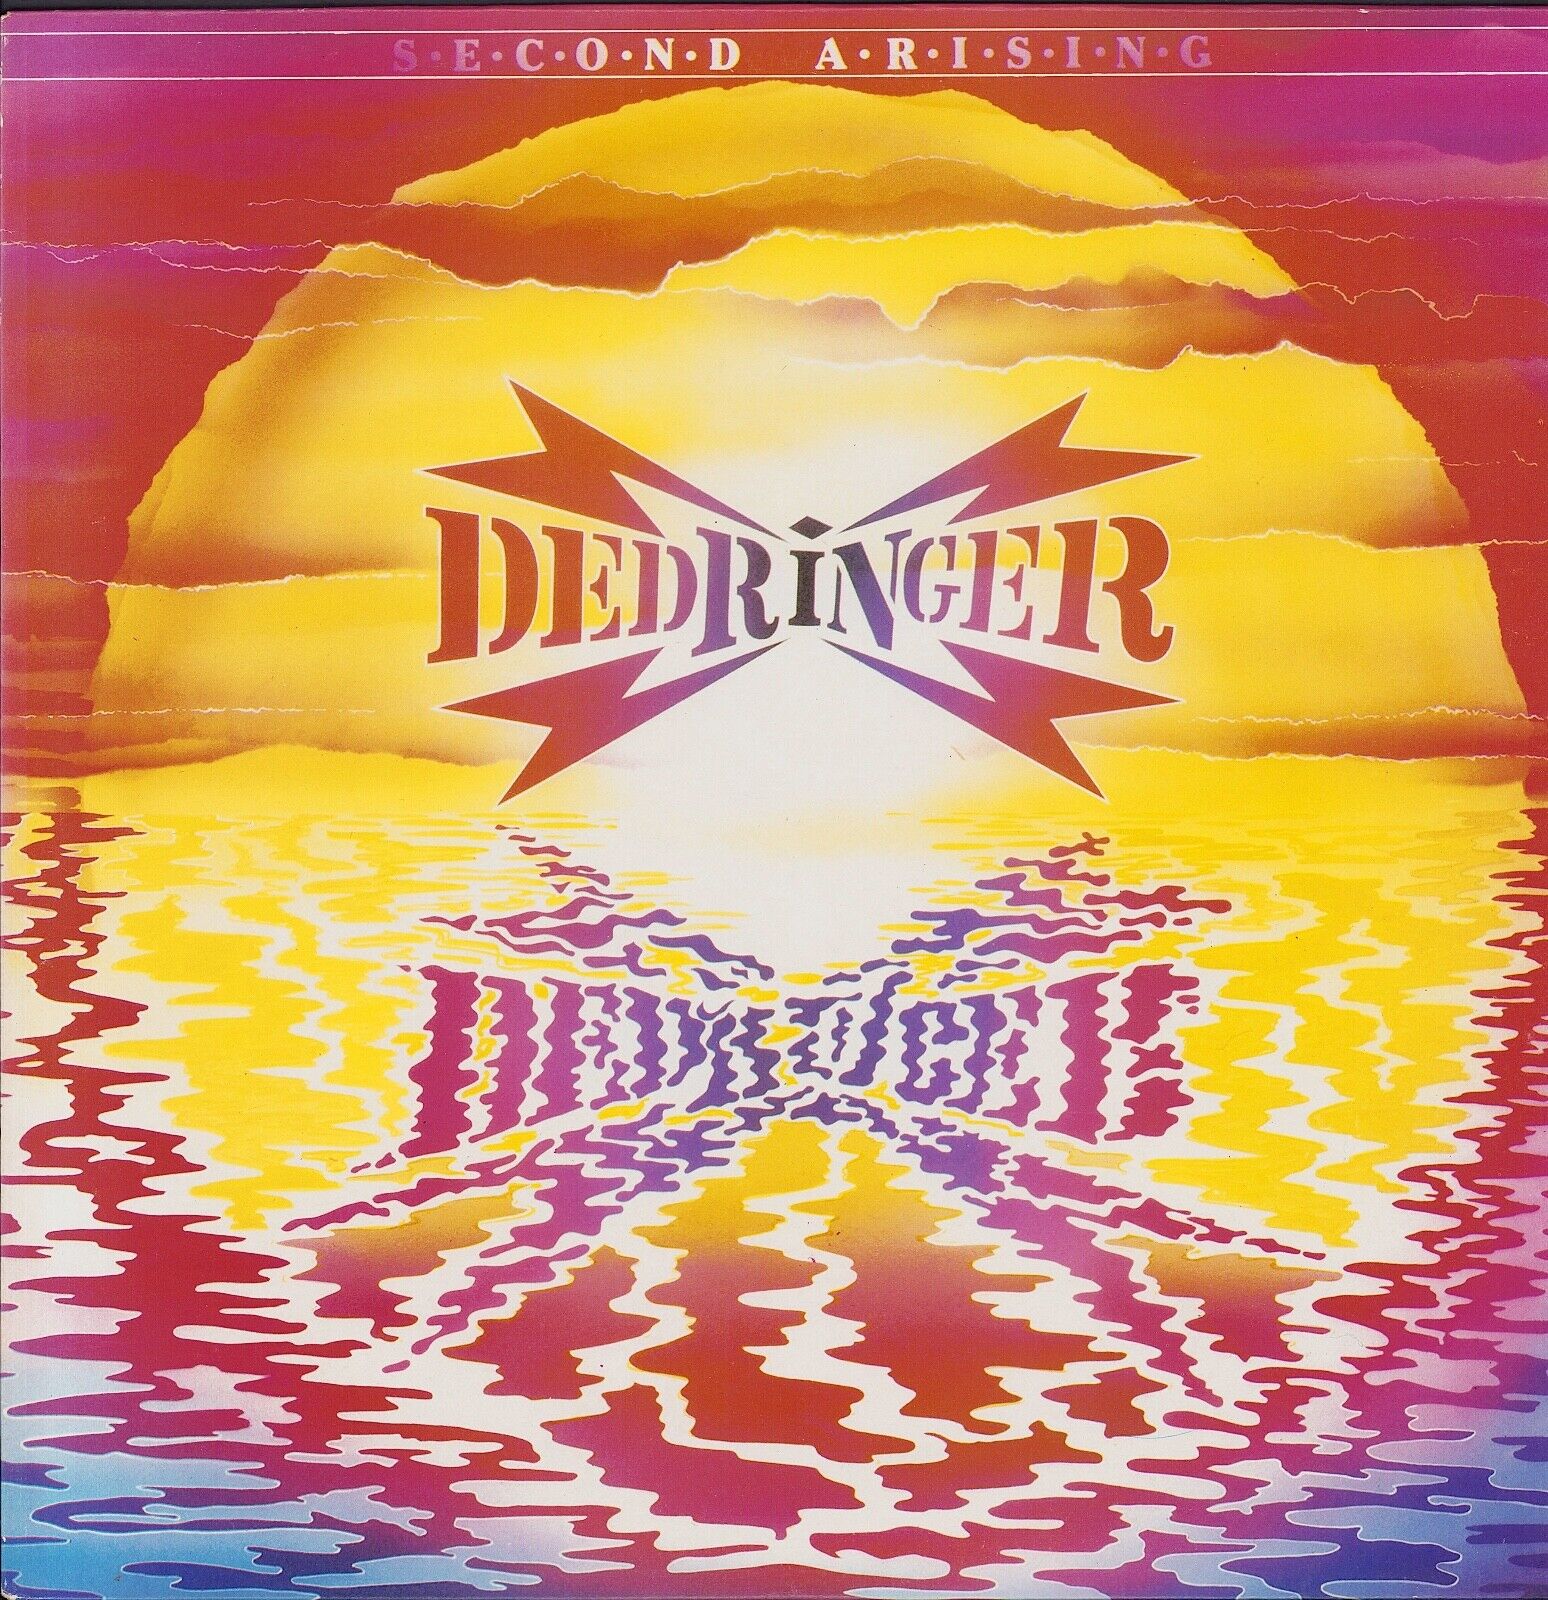 Dedringer ‎- Second Arising Vinyl LP